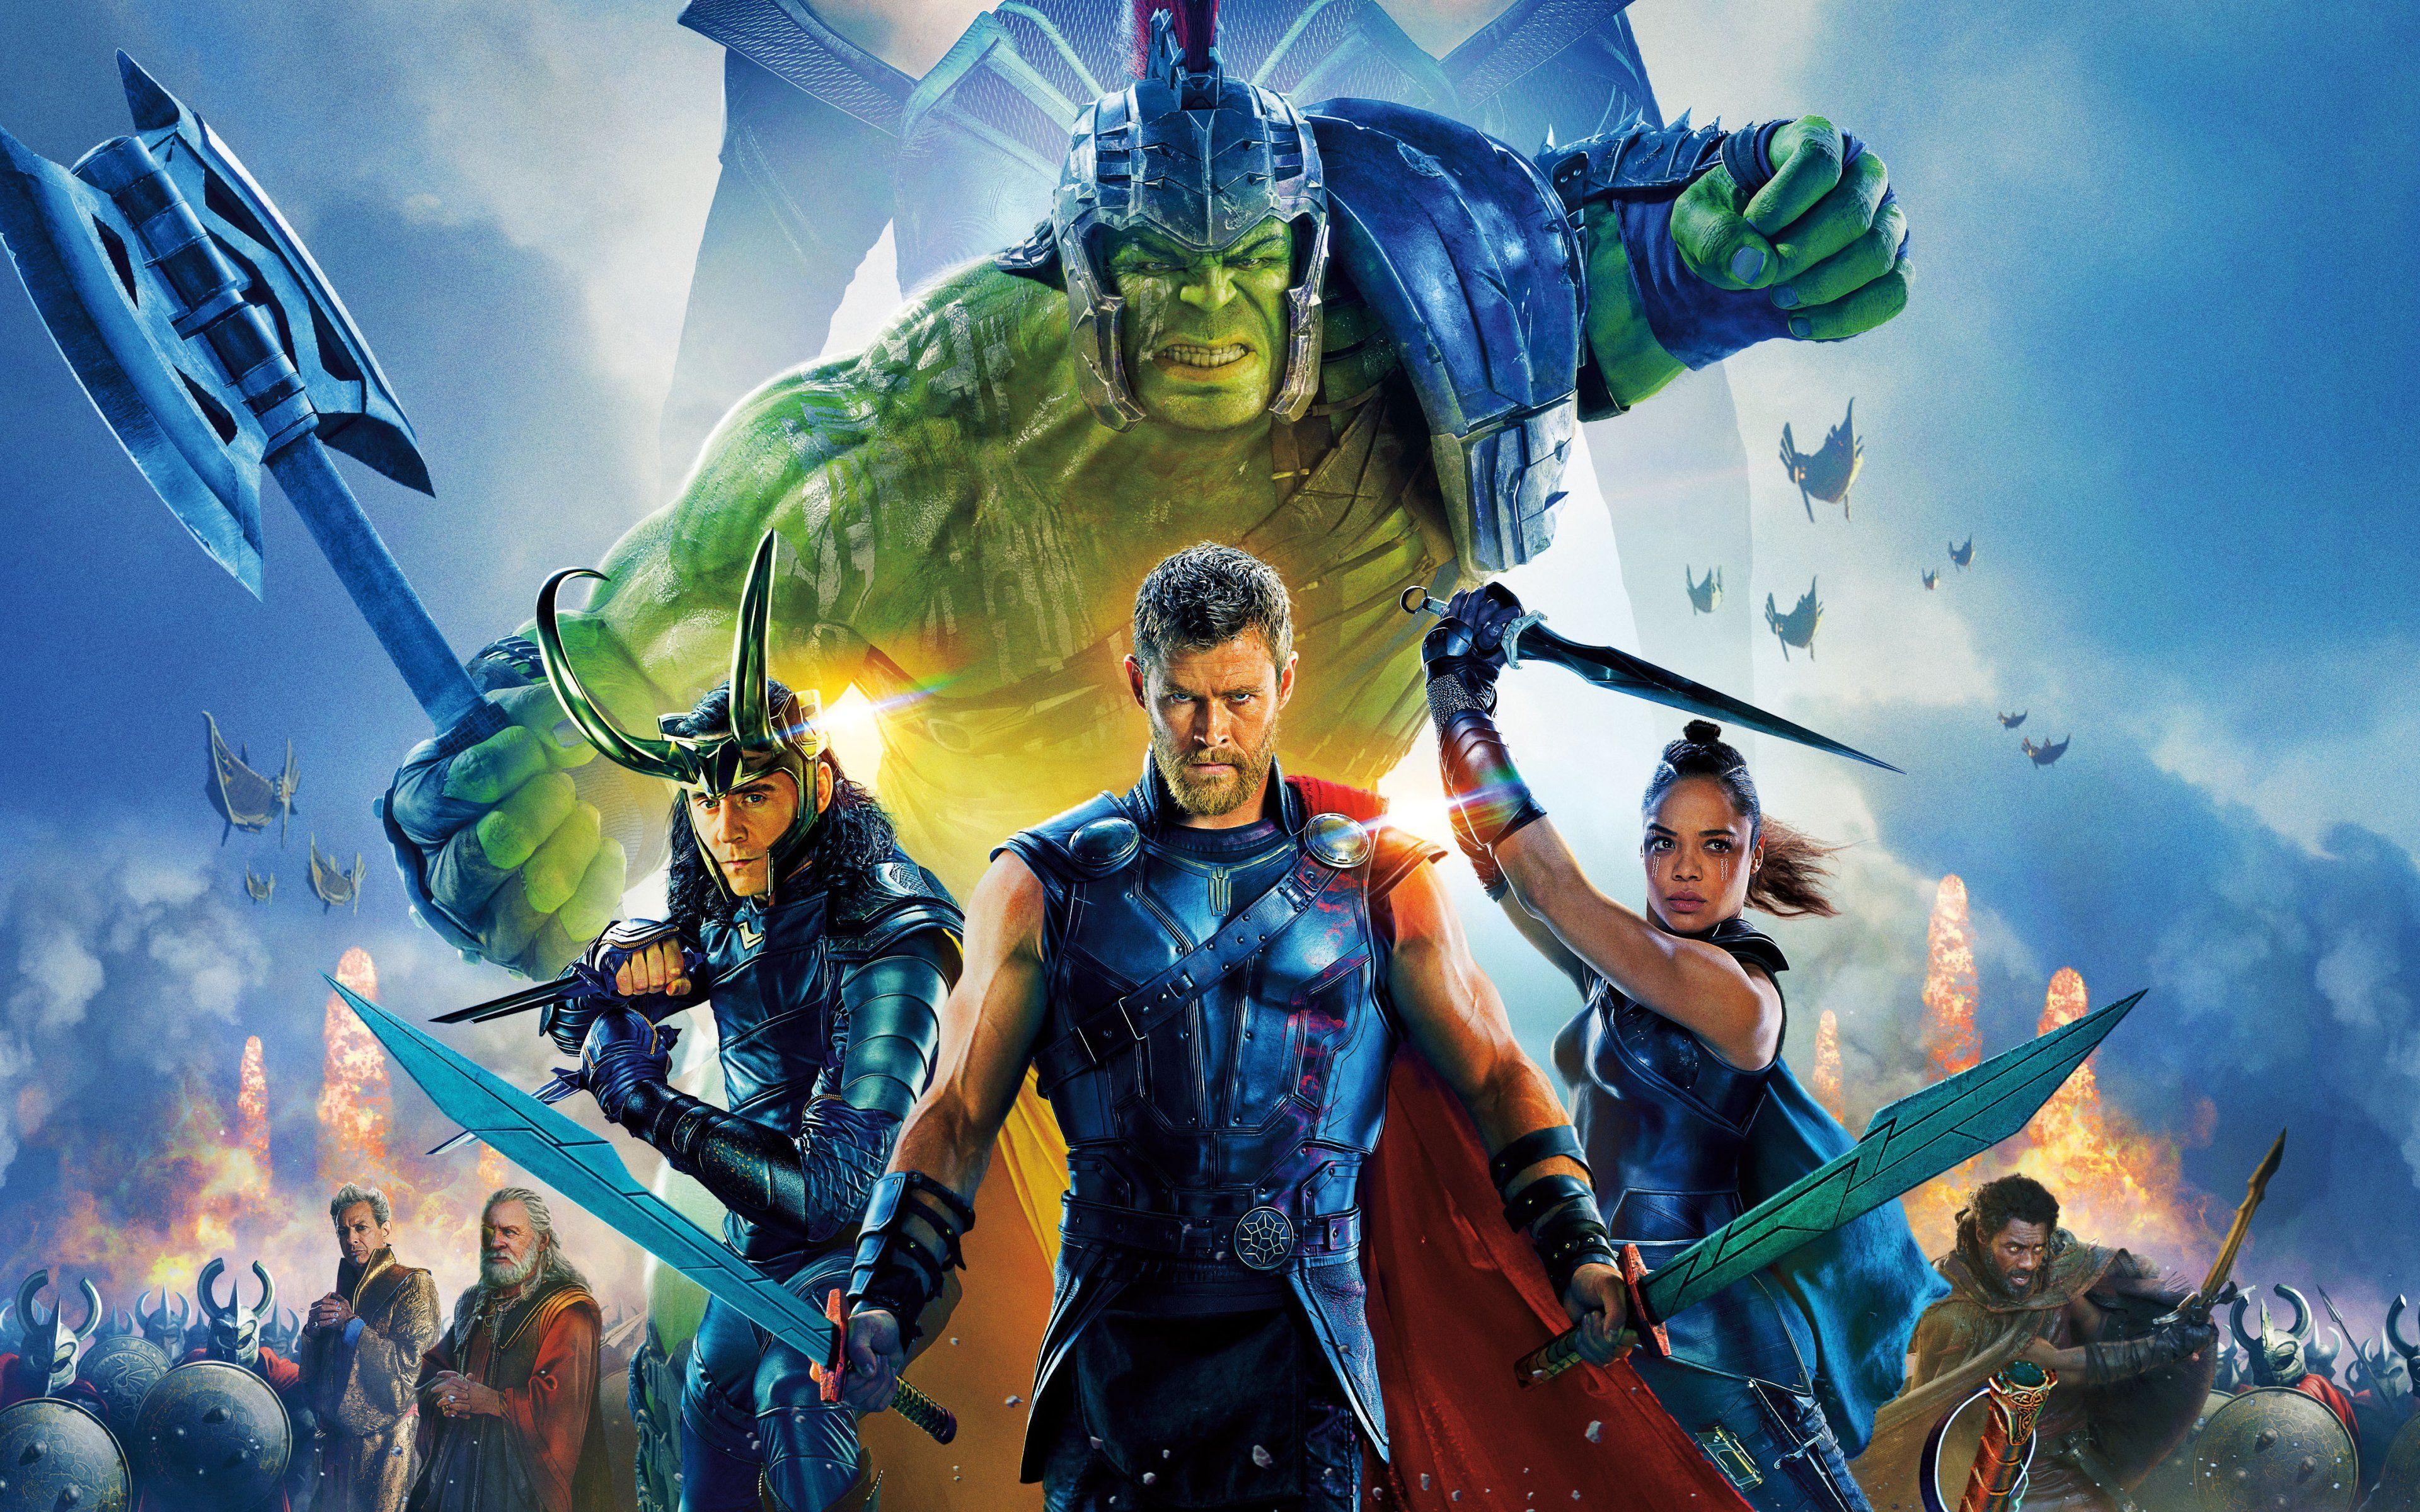 Thor 3 Ragnarok Movie Wallpaper Download For Desktop in HD 4K